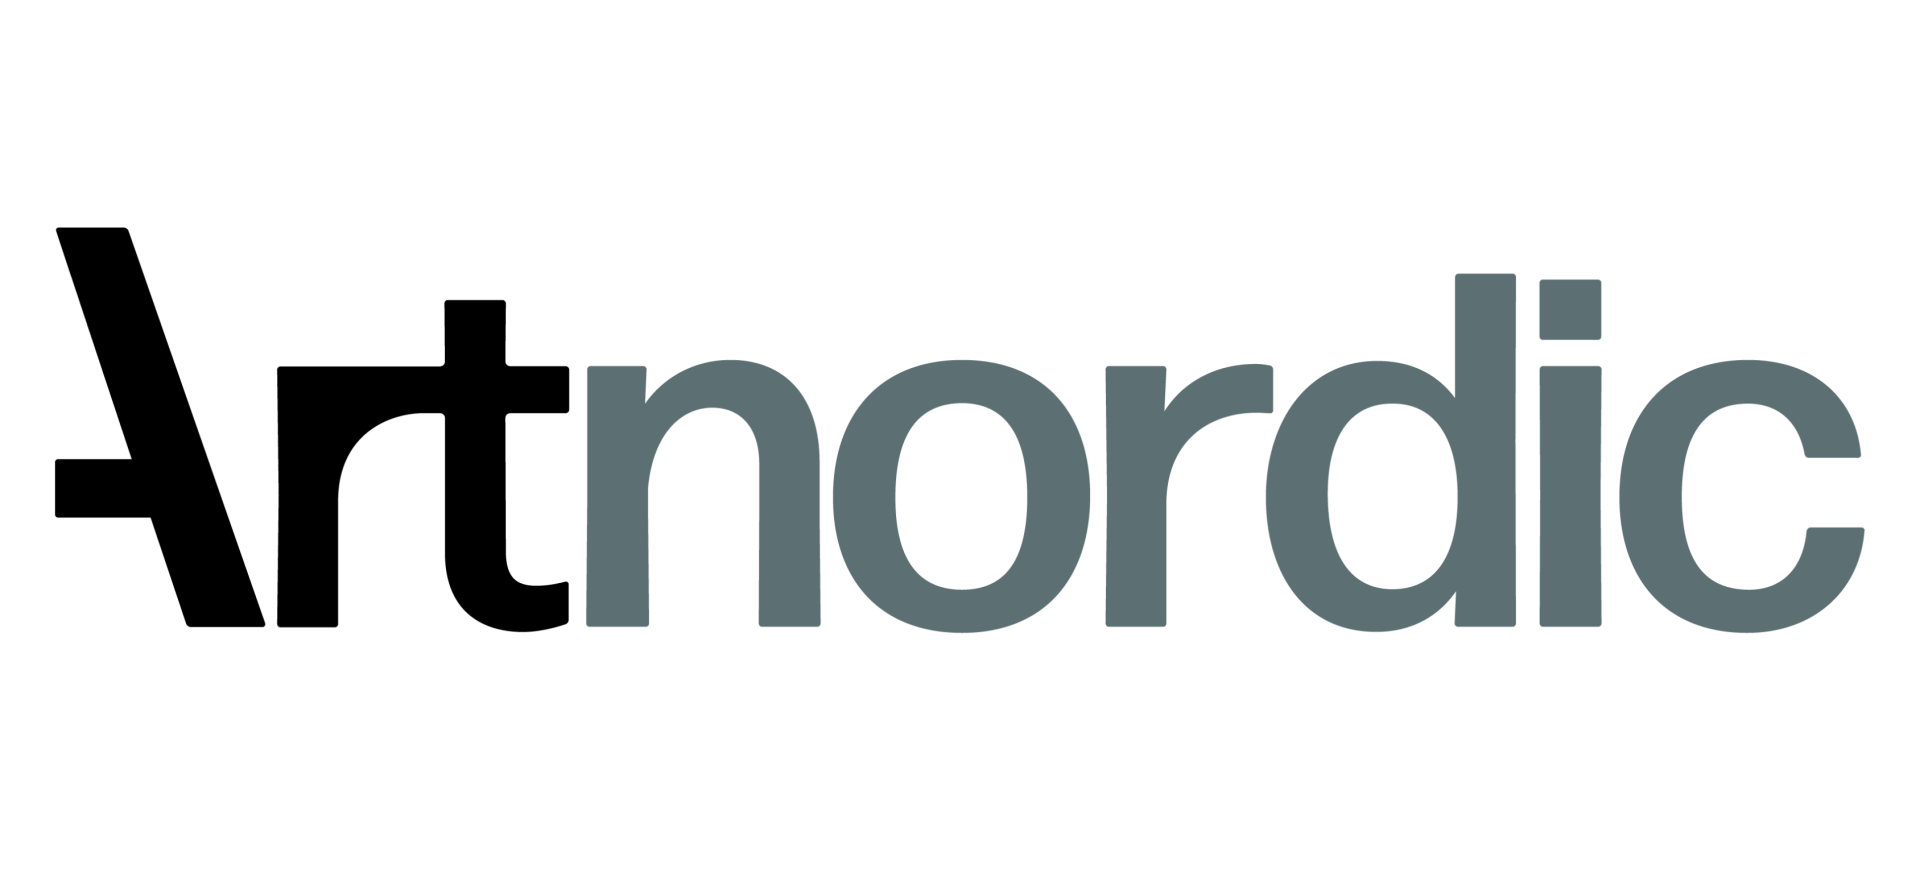 Art Nordic logo<br />
